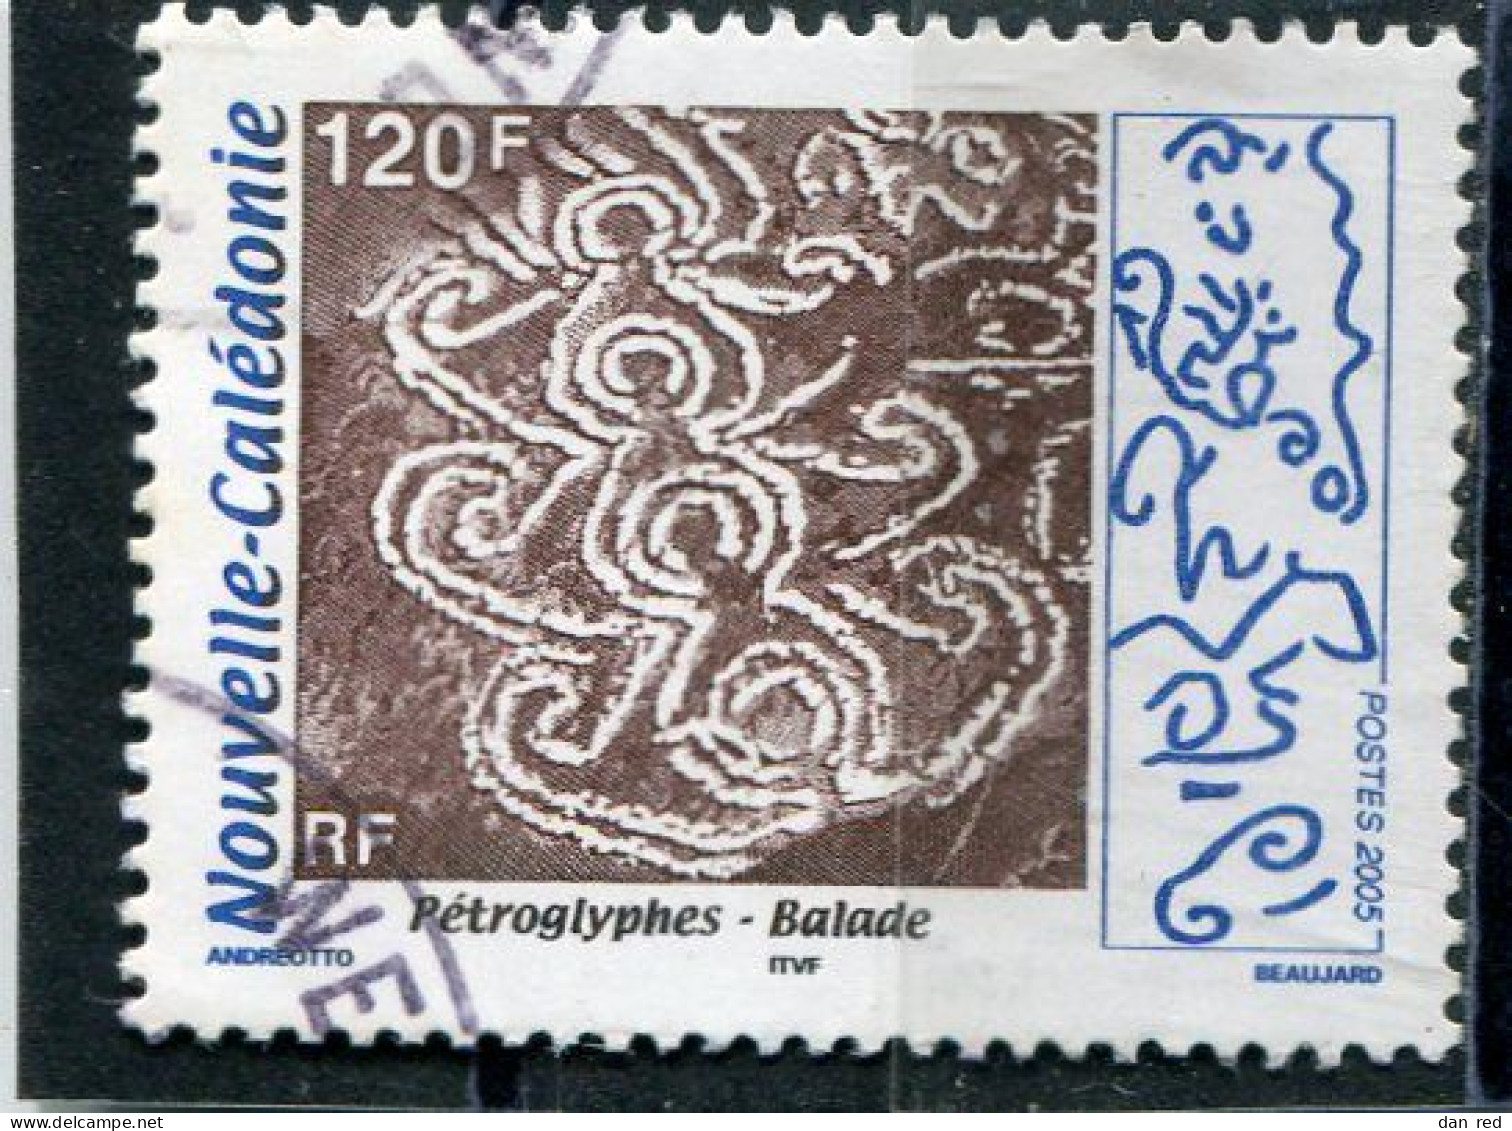 NOUVELLE CALEDONIE  N°  955  (Y&T)  (Oblitéré) - Used Stamps